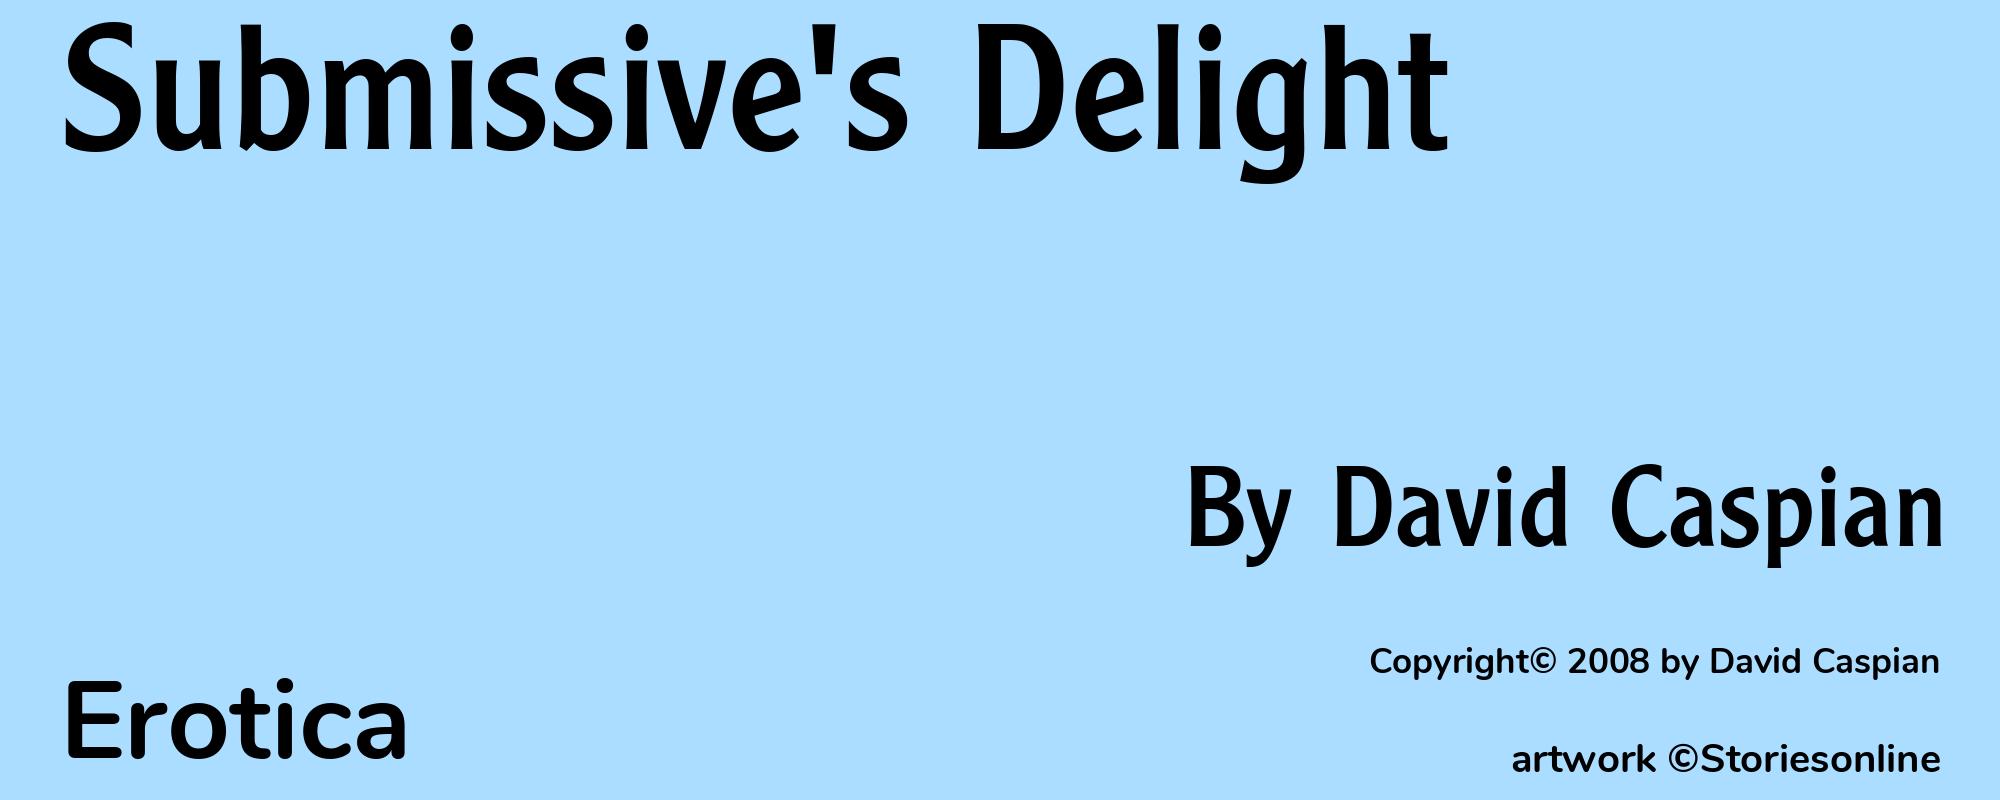 Submissive's Delight - Cover